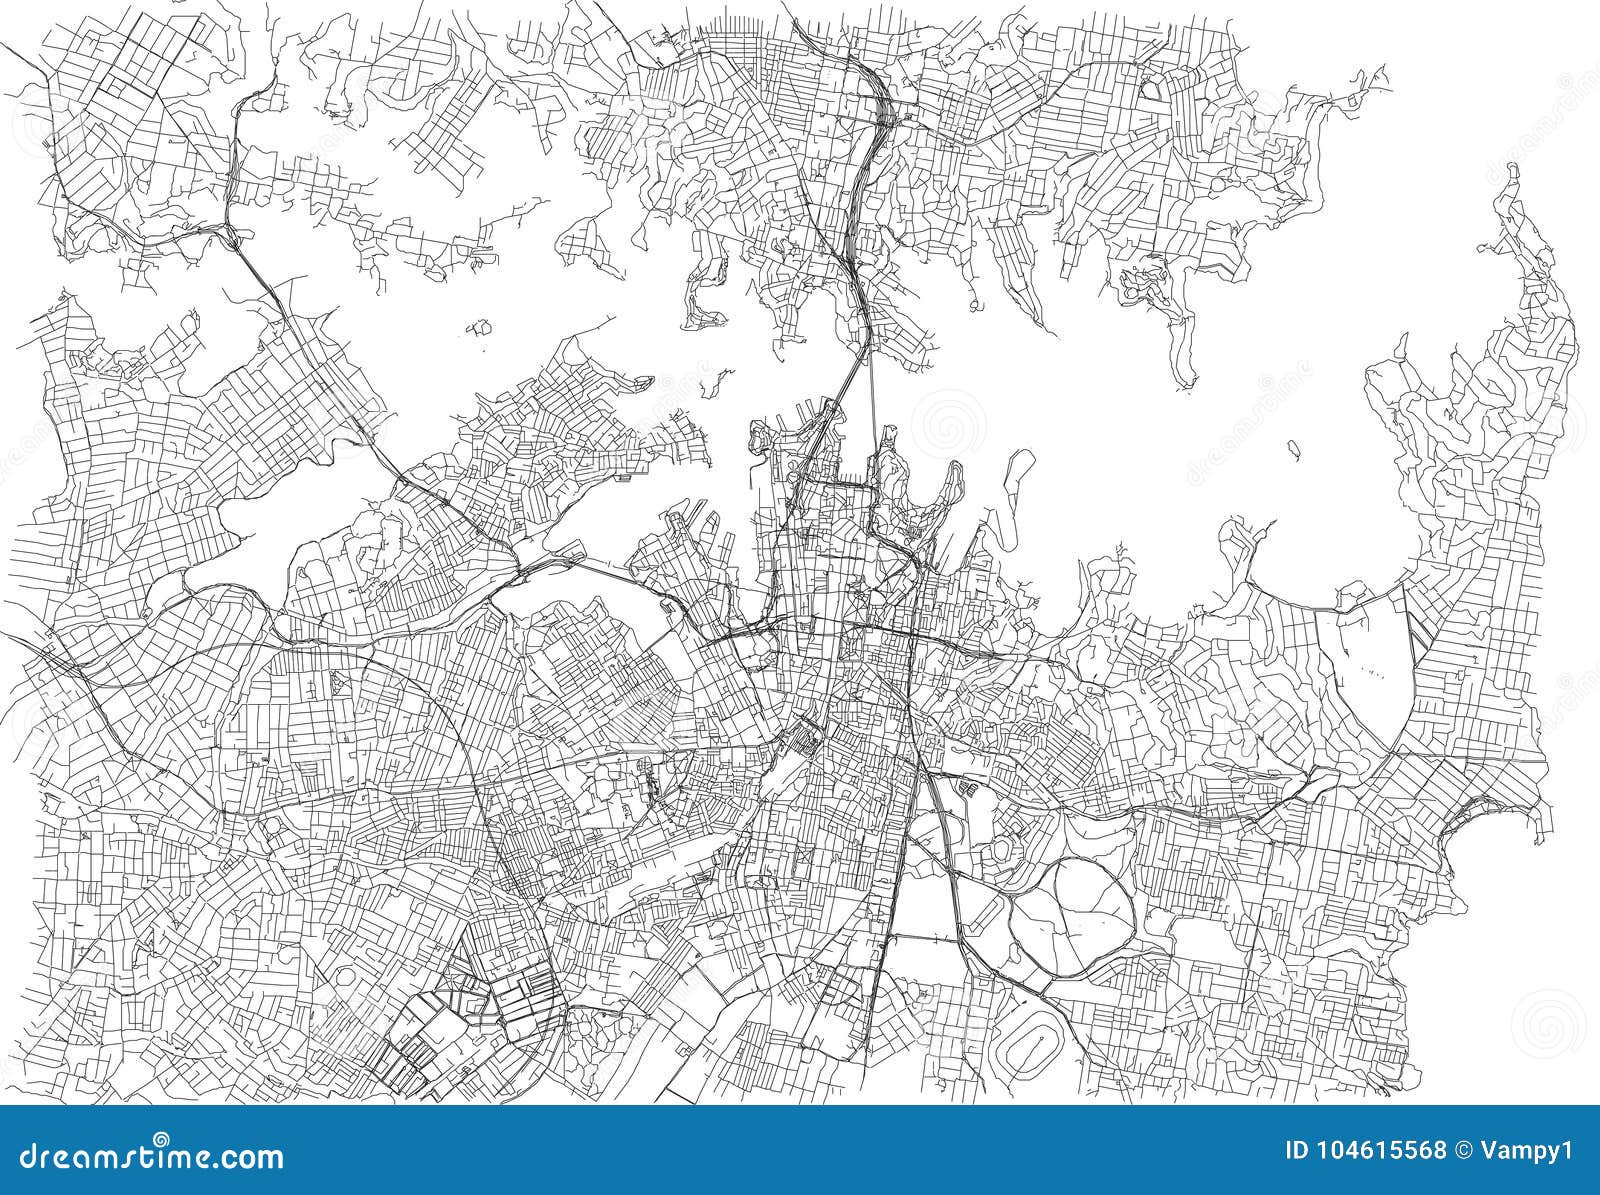 streets of sydney, city map, australia